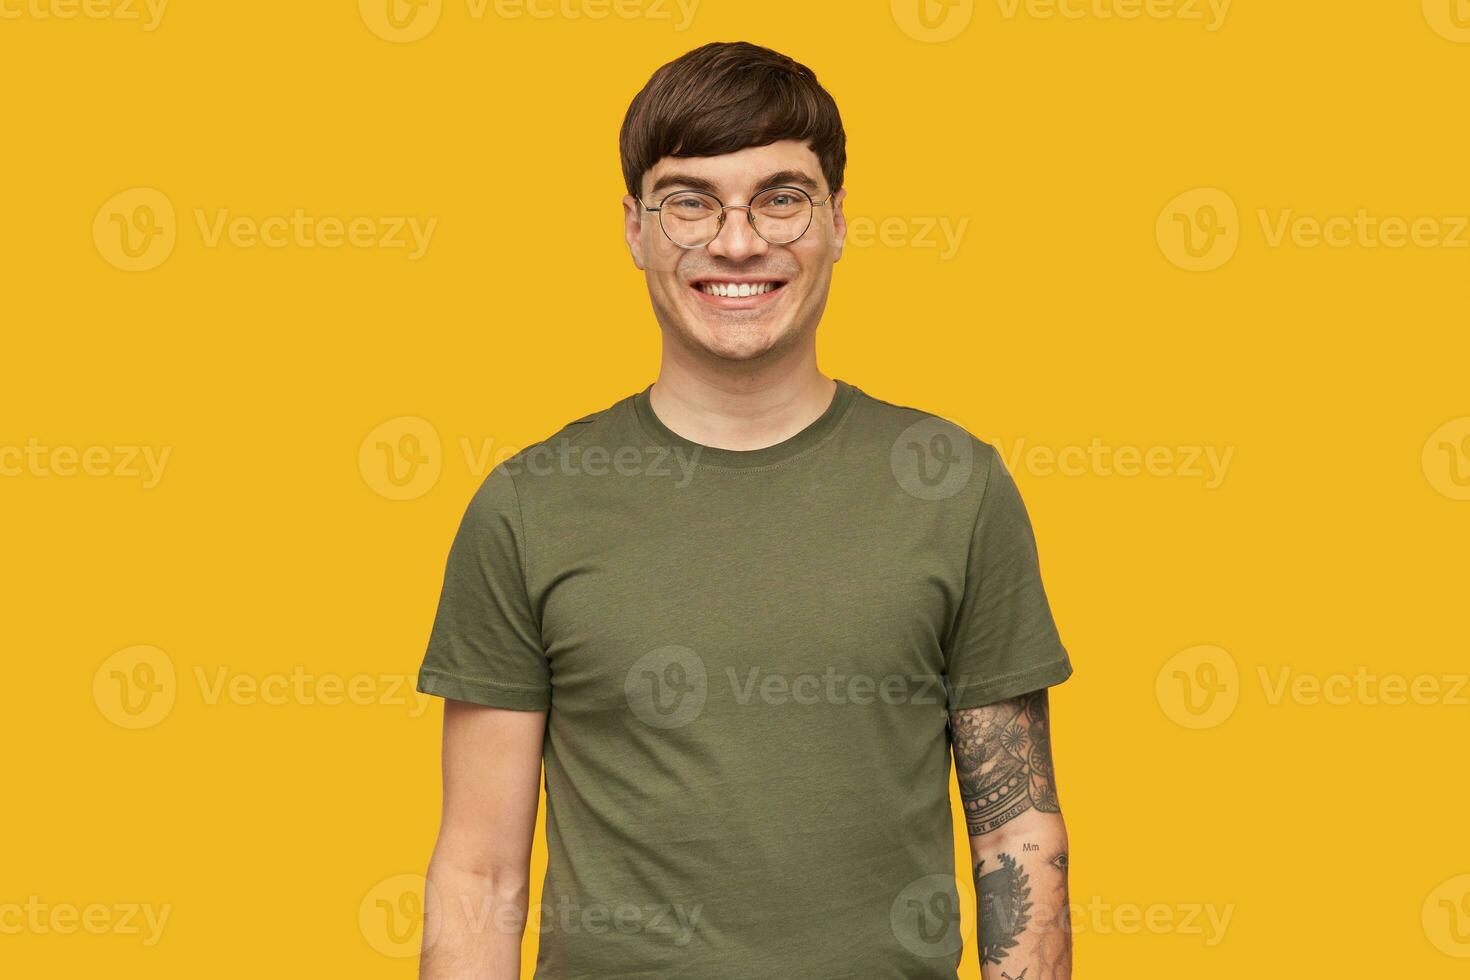 interior Disparo de joven atractivo masculino, en redondo elegante lentes y usa verde camiseta, sonrisas en general con contento facial expresión. aislado terminado amarillo antecedentes. foto